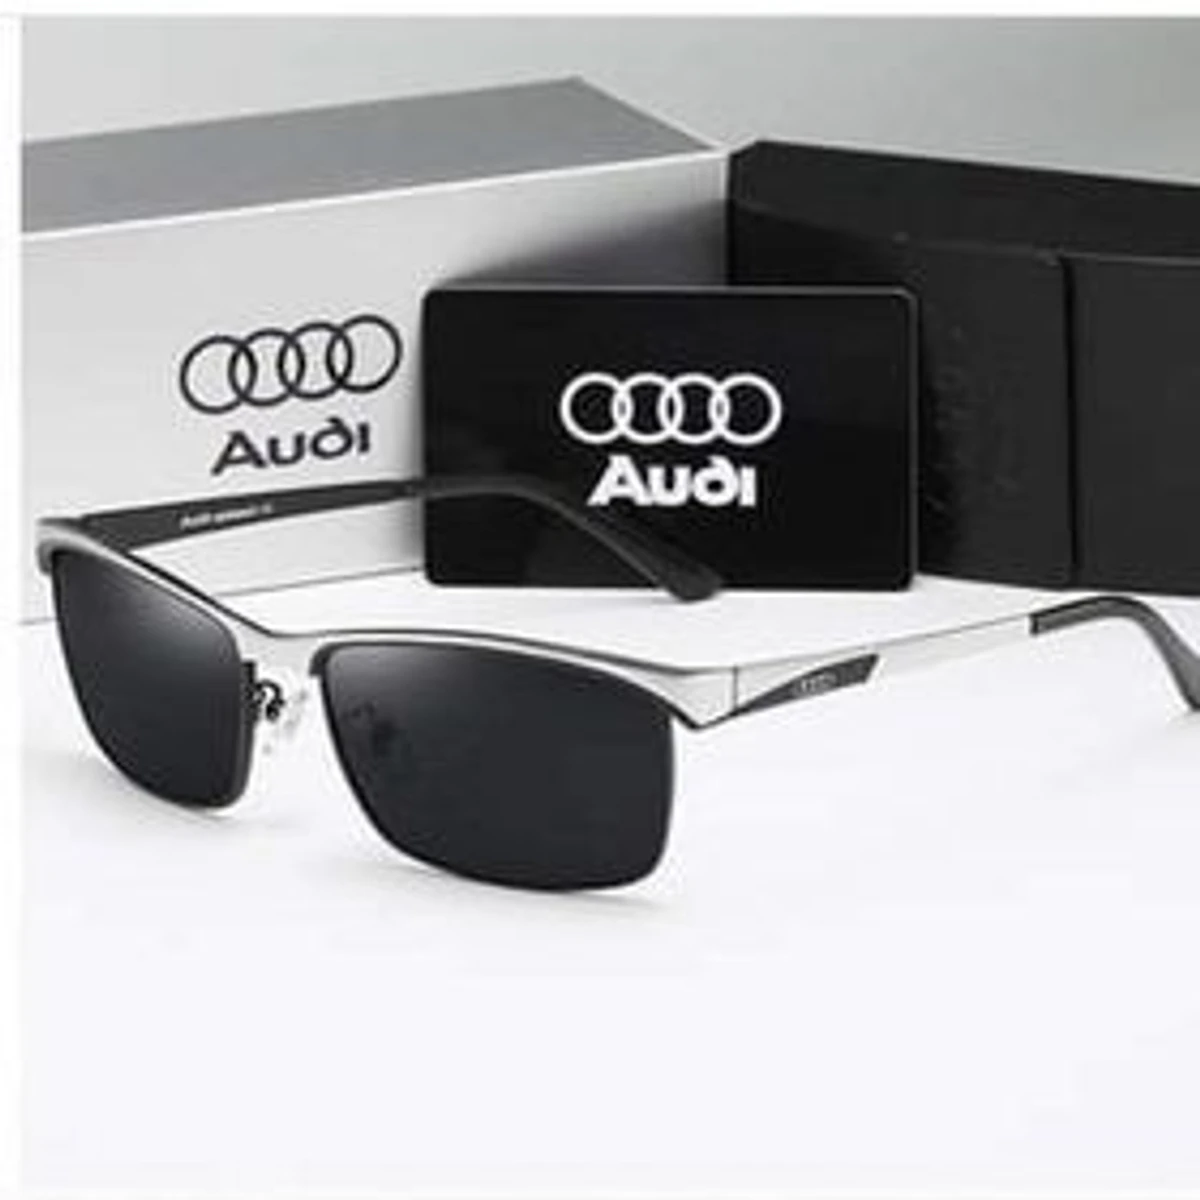 Audi Polarized Sunglasses silver edition